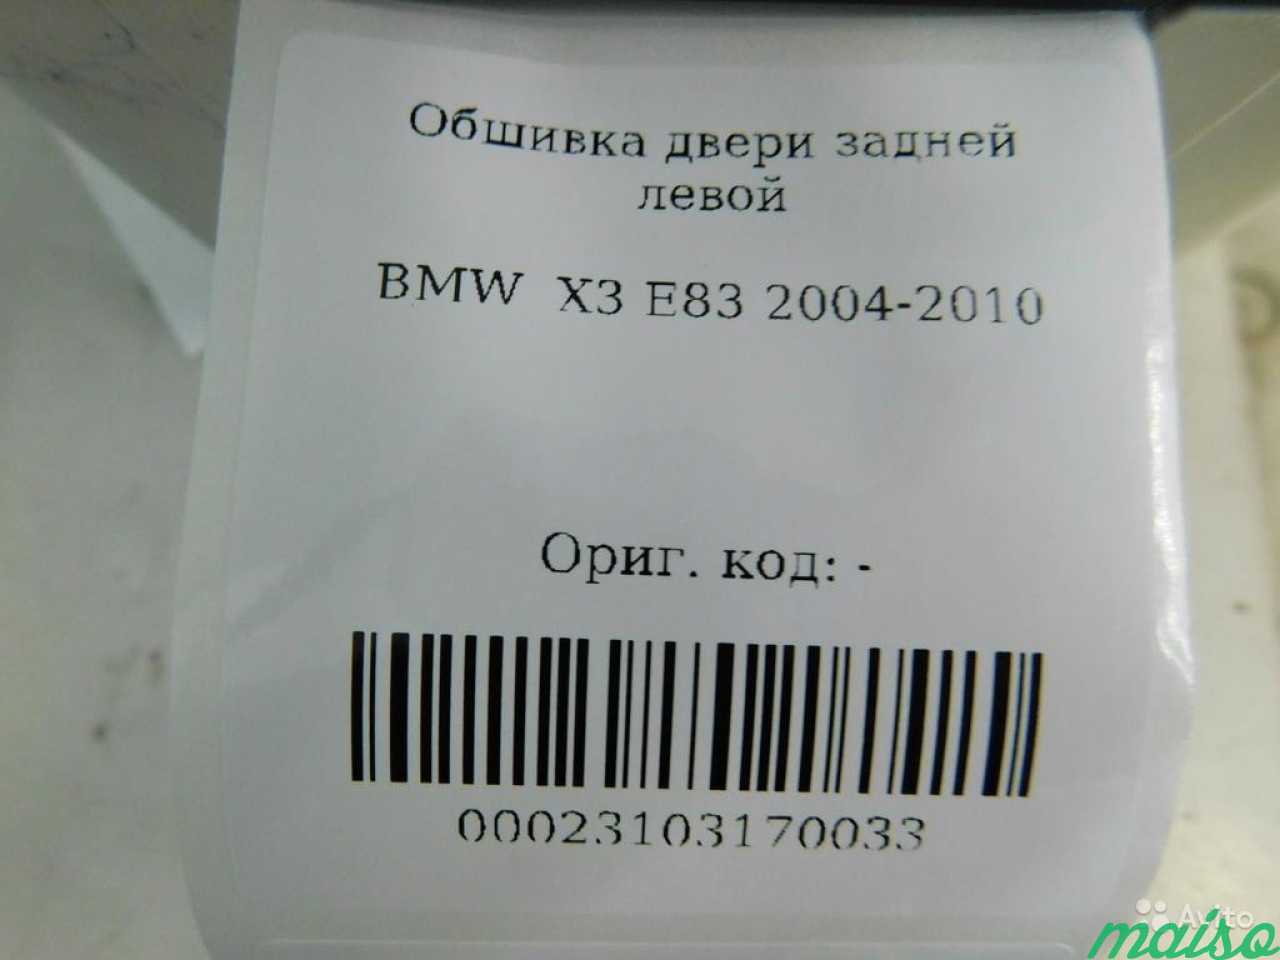 Обшивка двери задней BMW X3 E83 2003-2010 в Санкт-Петербурге. Фото 5